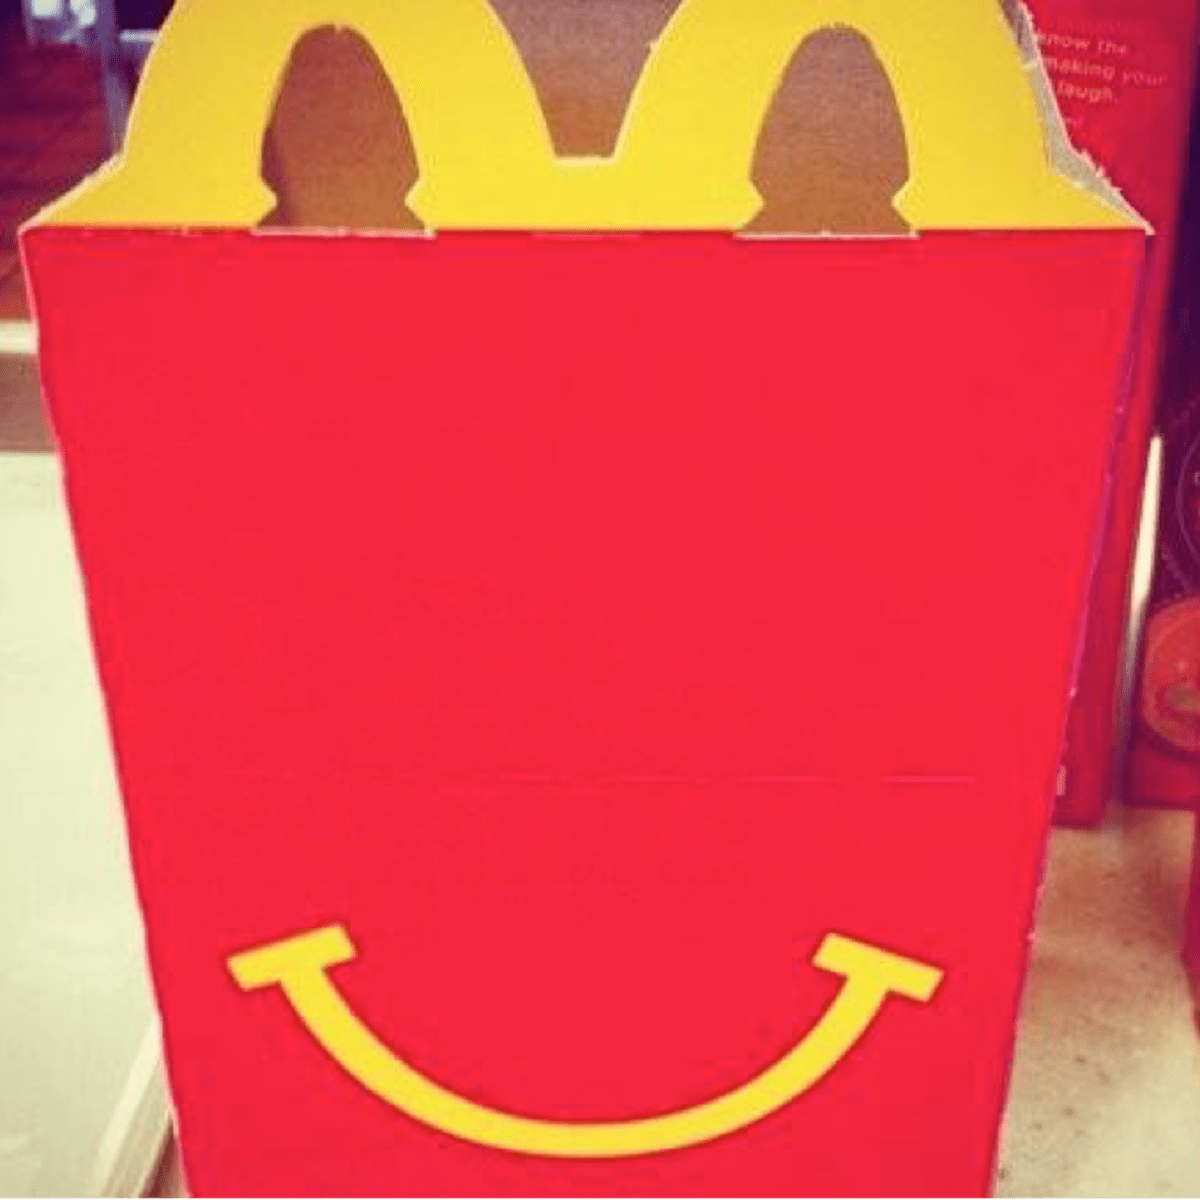 mcdonalds happy meal smile logo